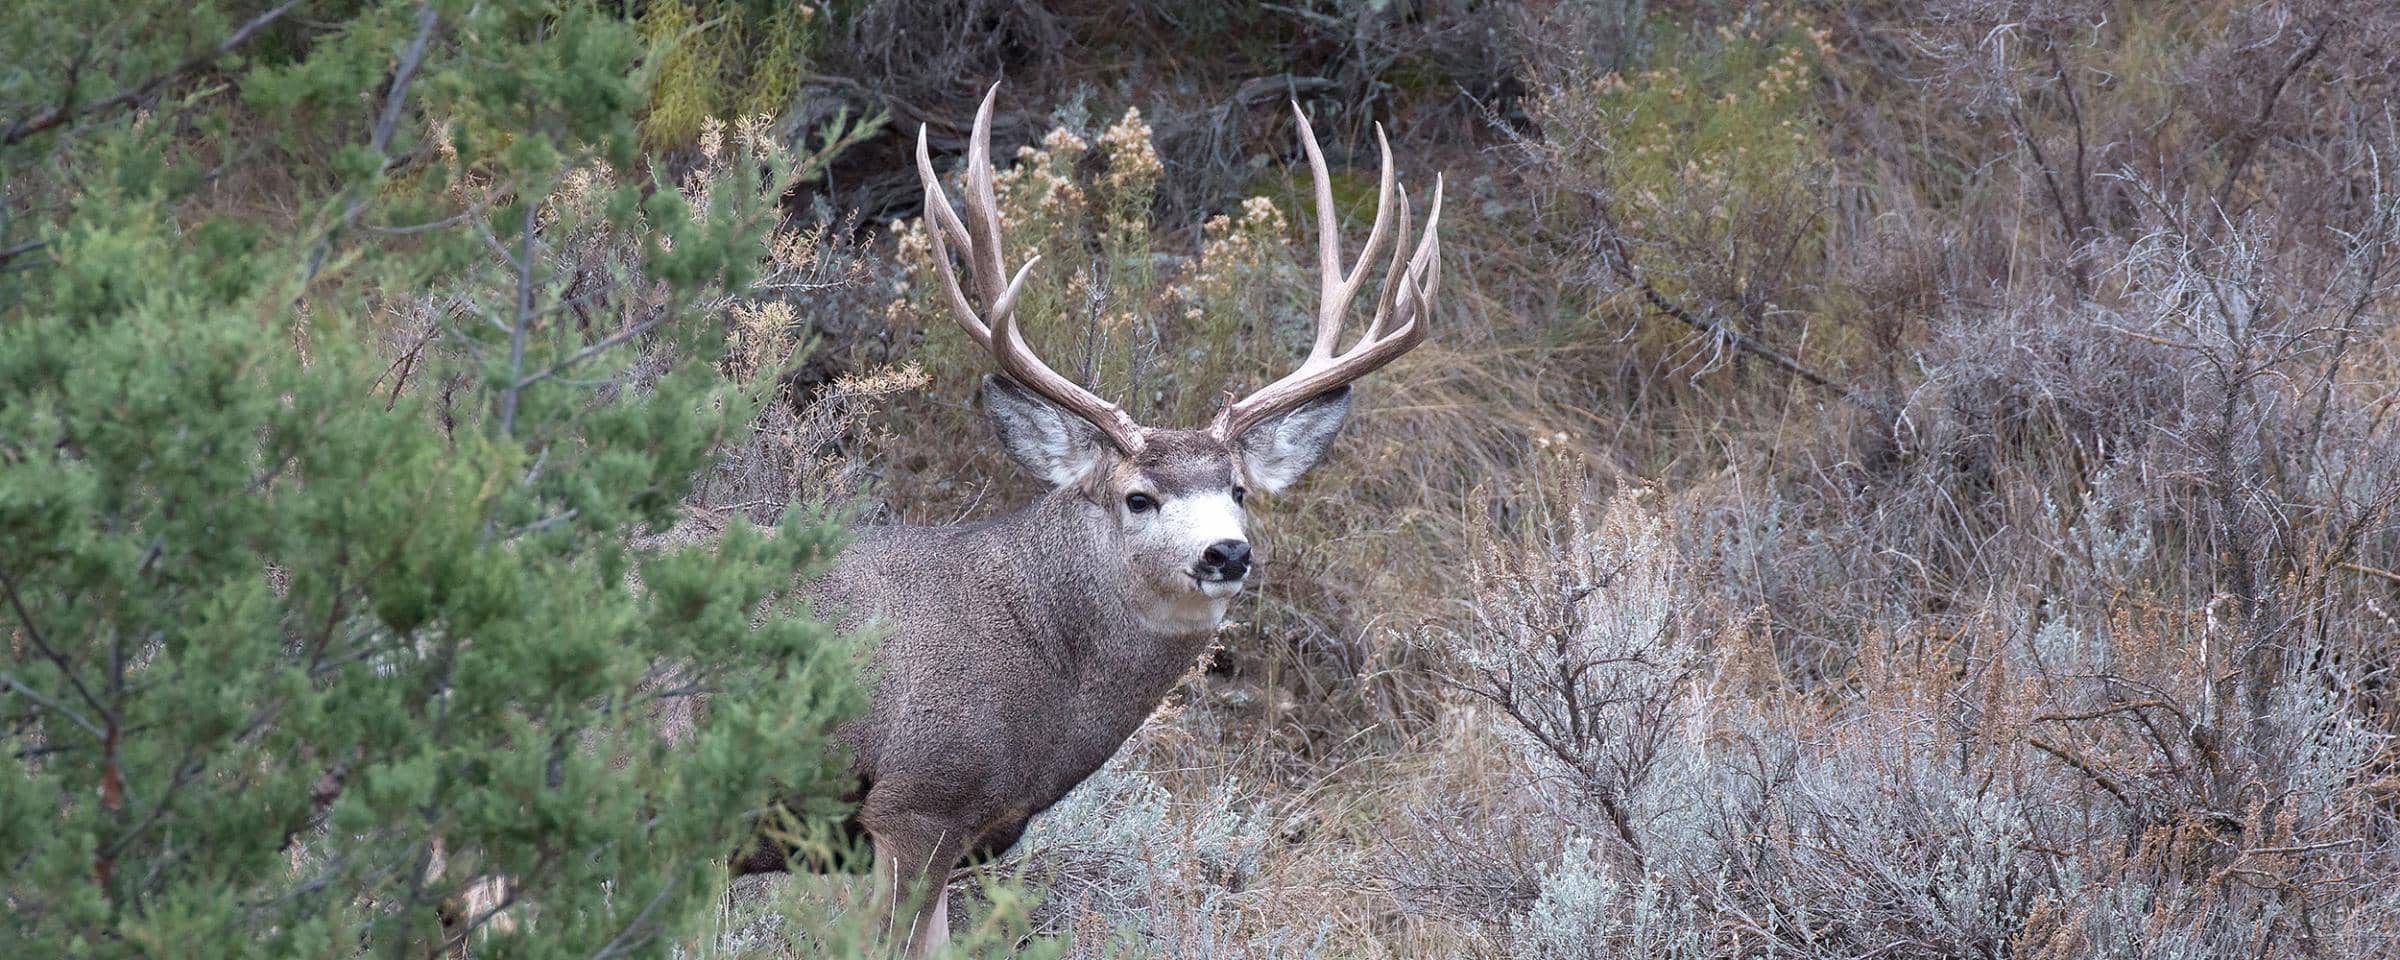 Archery Deer Season Opens at Noon Today News Dakota